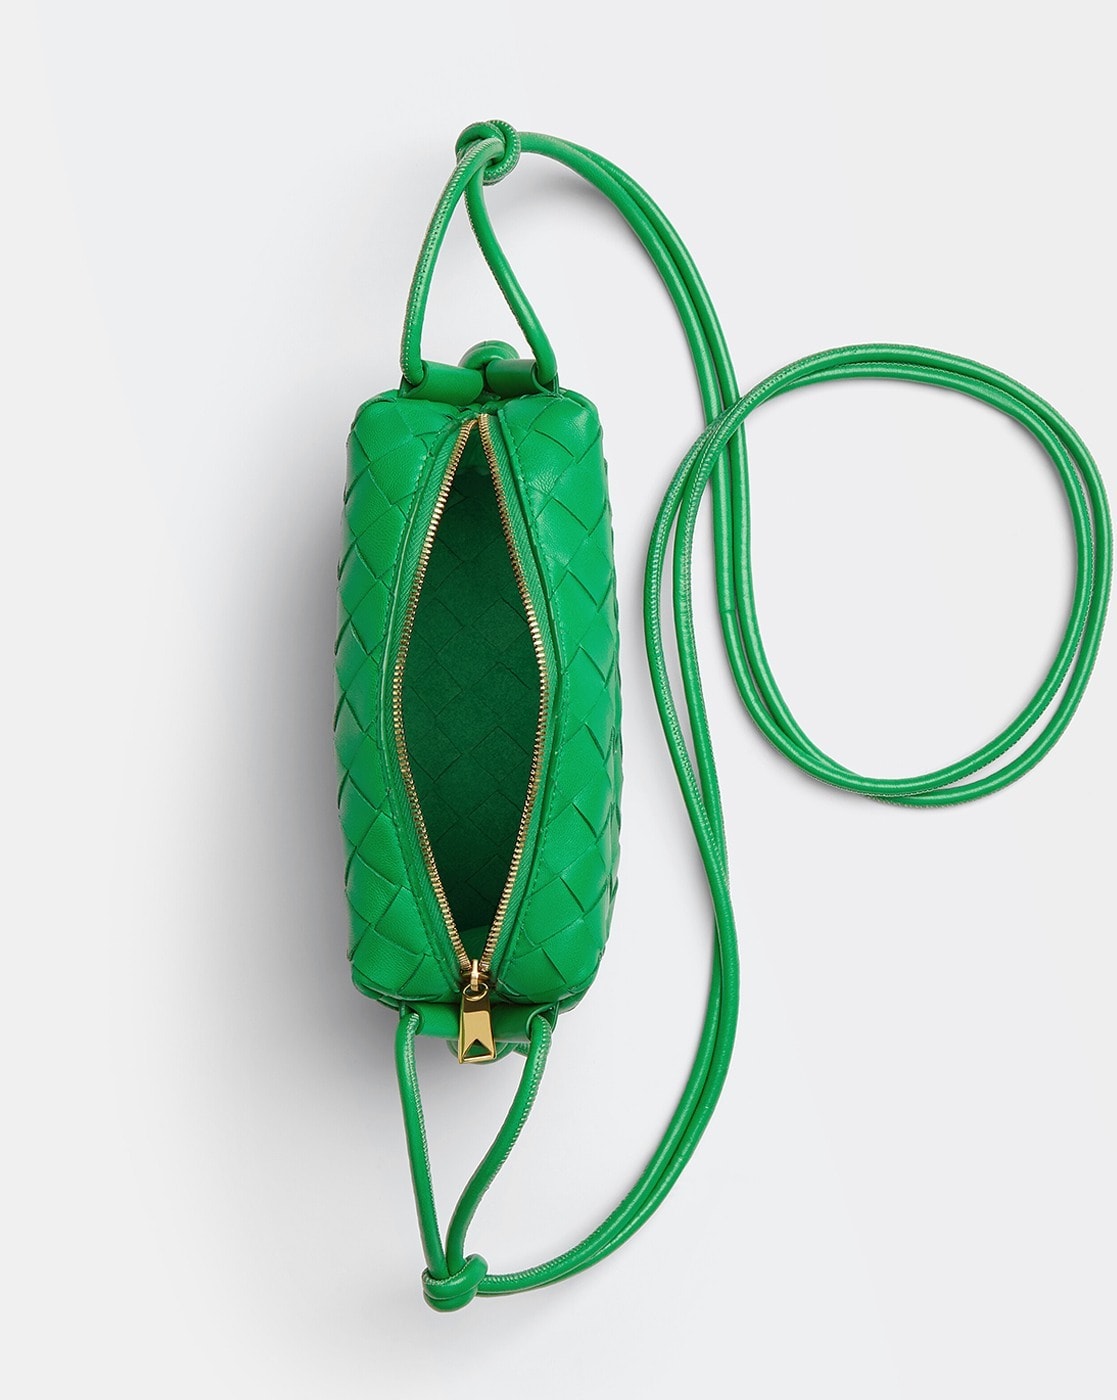 Bottega Veneta green bag mini loop bag green, Current